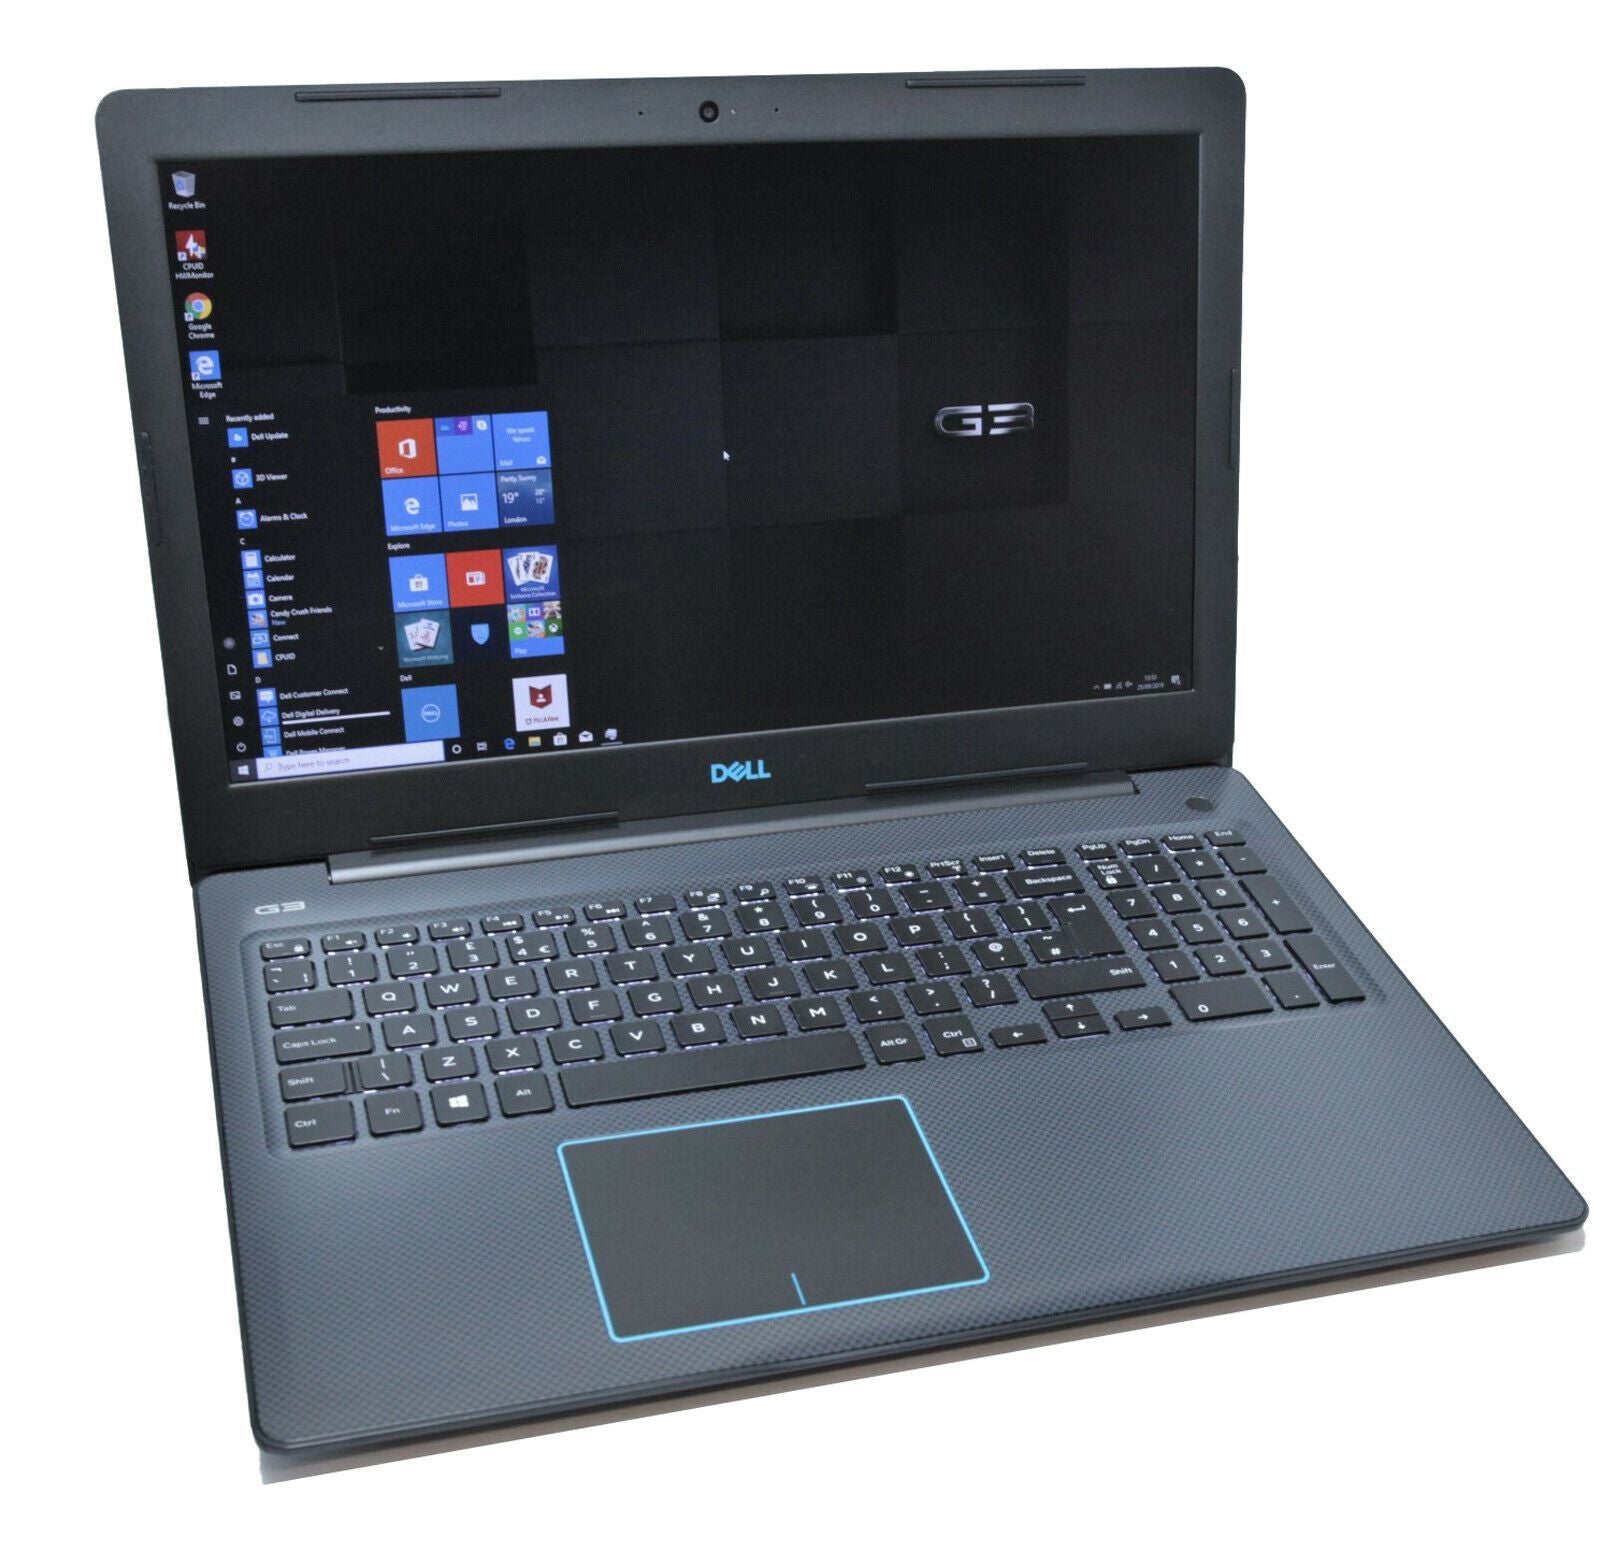 Dell G3 15 Ips Gaming Laptop Core I7 8750h Gtx 1060 Max Q 256gb 1tb 16gb Ram Cruisetech